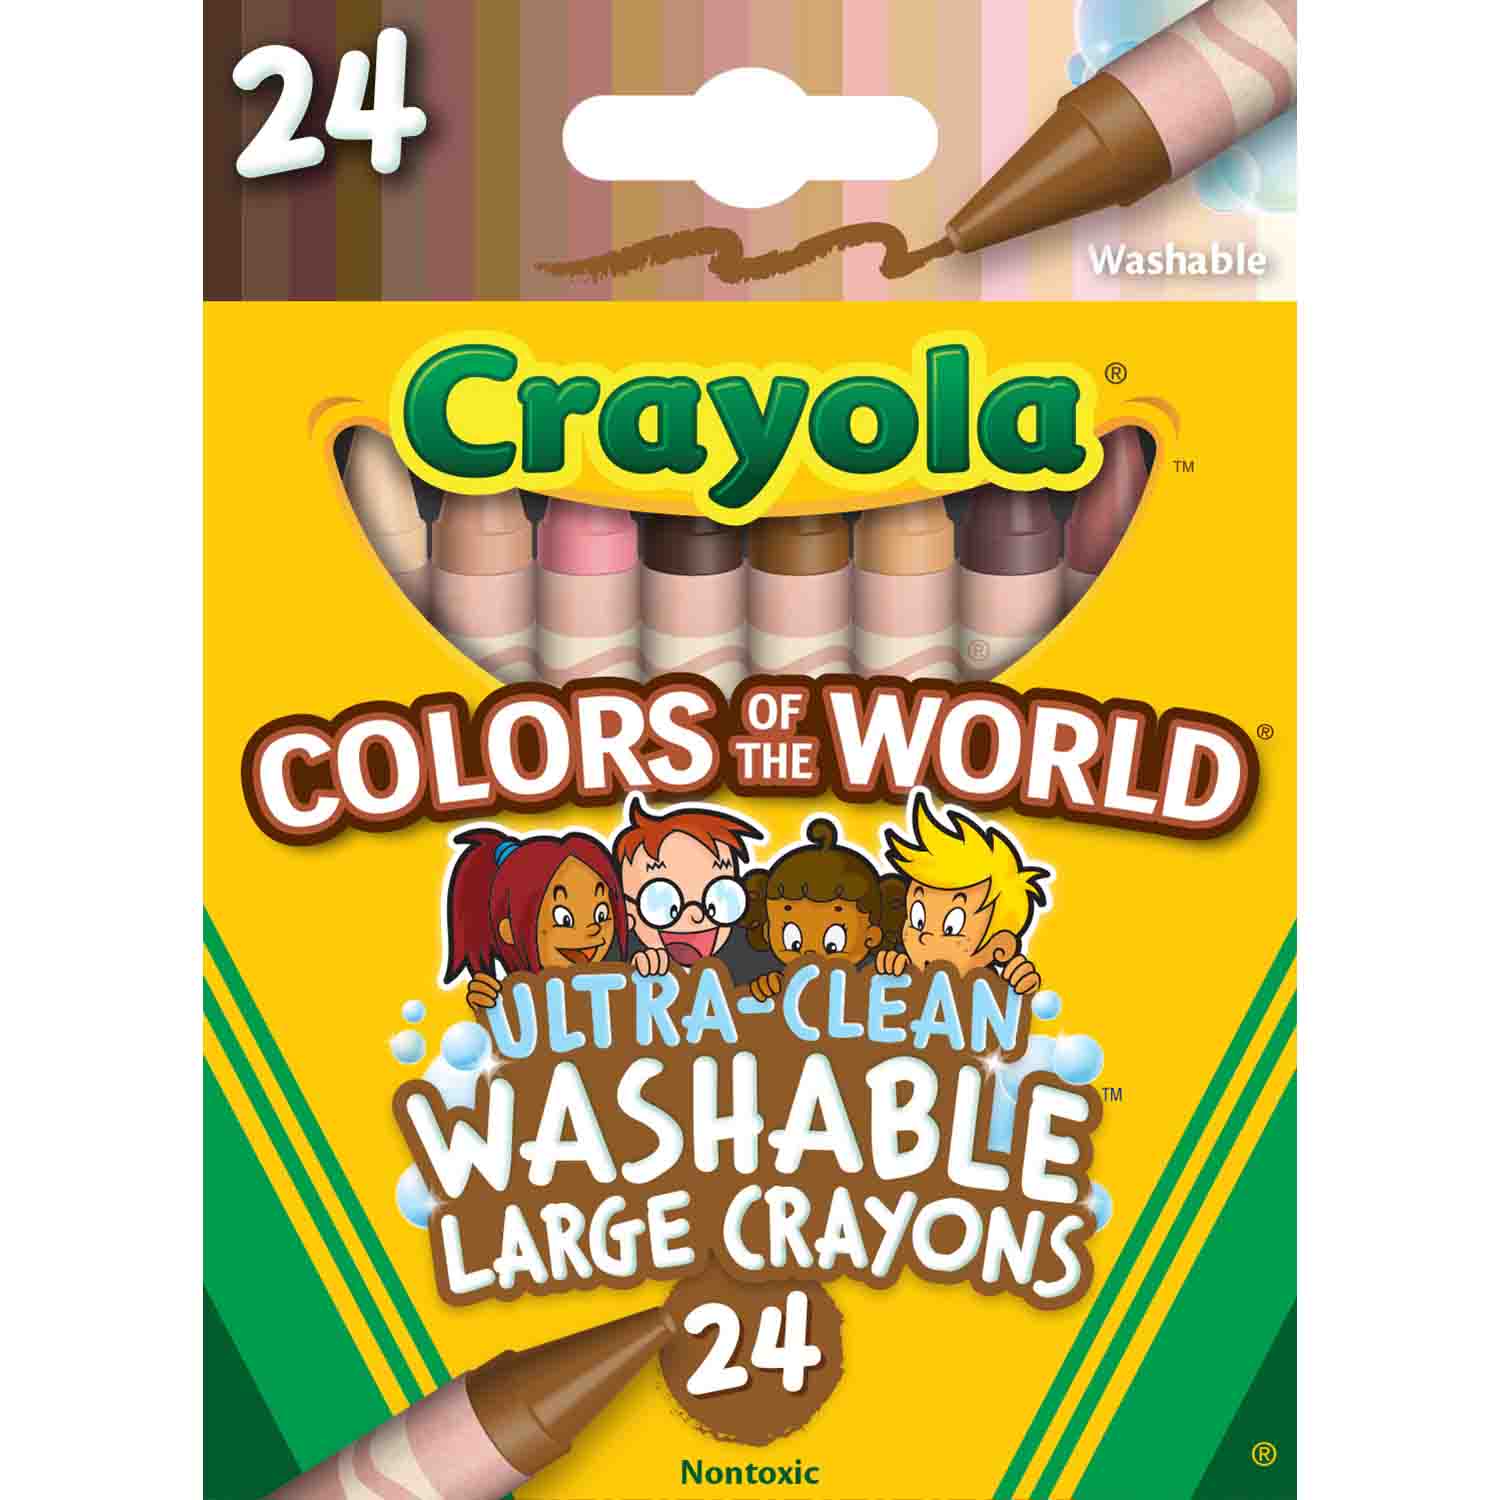 Skin Tone Crayons